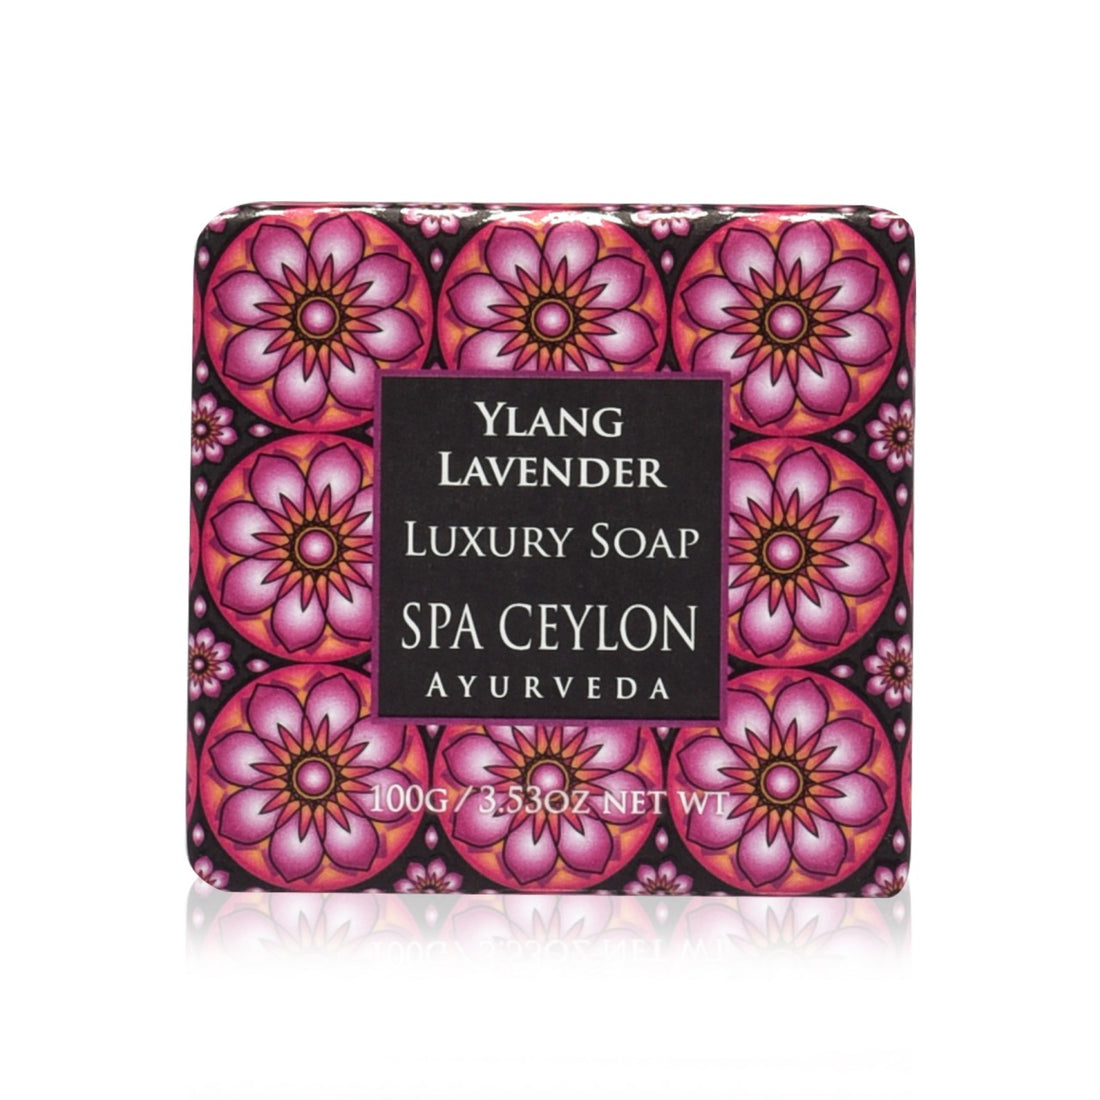 Ylang Lavender Luxury Soap